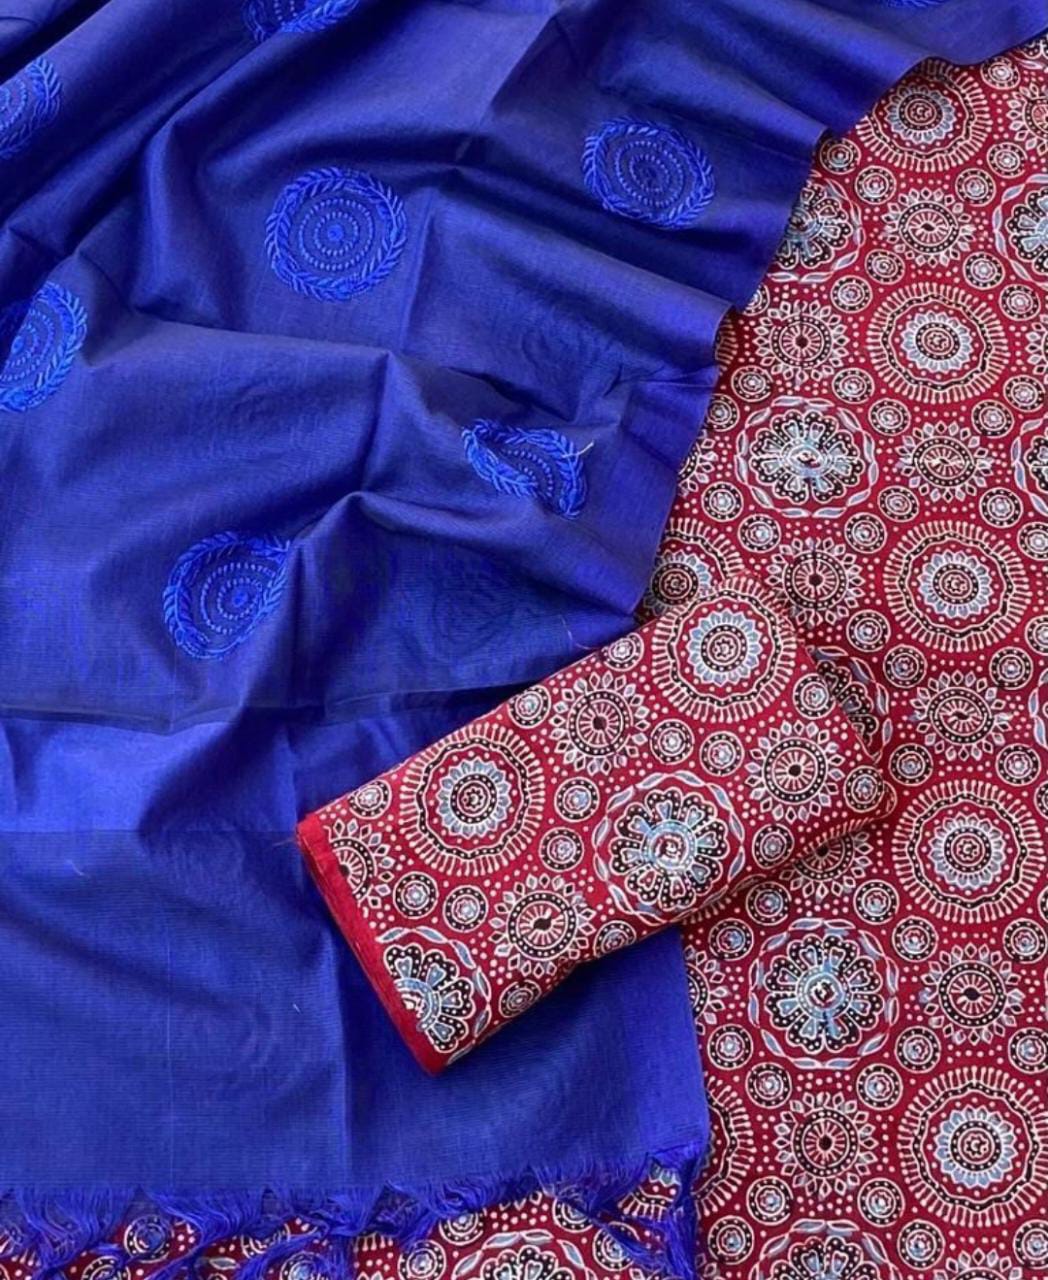 Ajrakh print tukdi (patchwork) dupatta with cotton suit